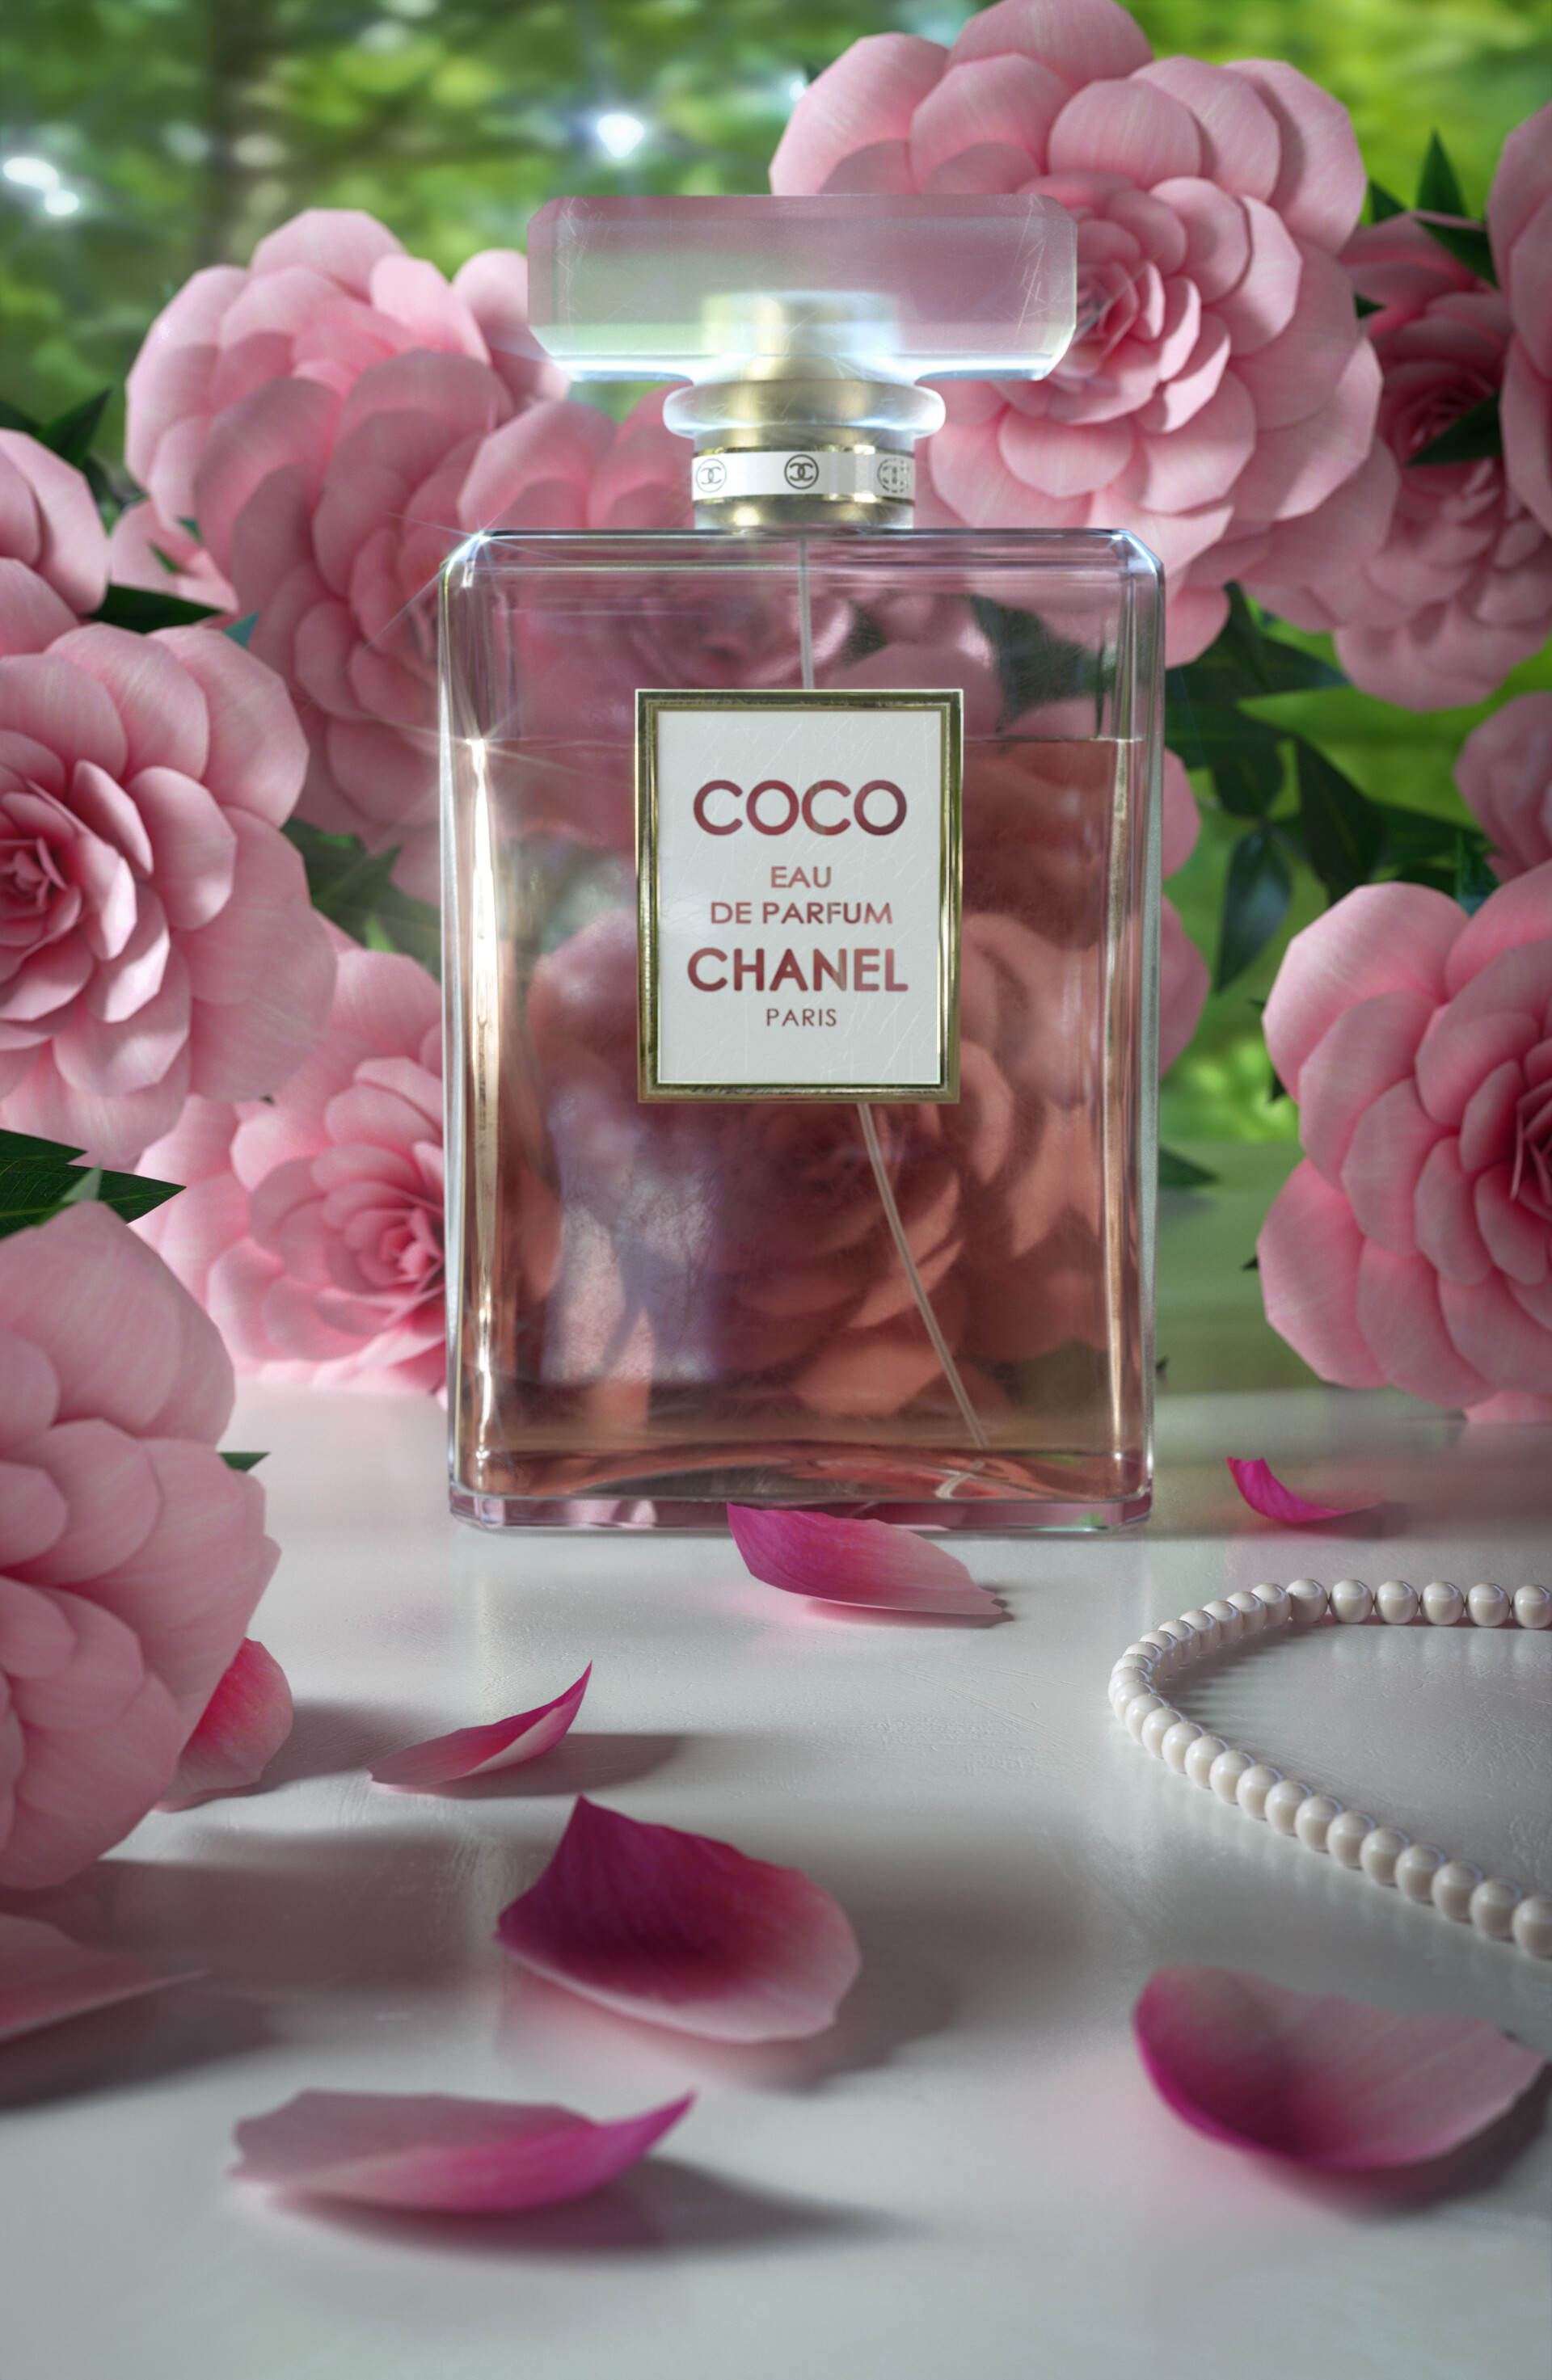 Harsimran Singh - Coco Chanel Perfume CGI